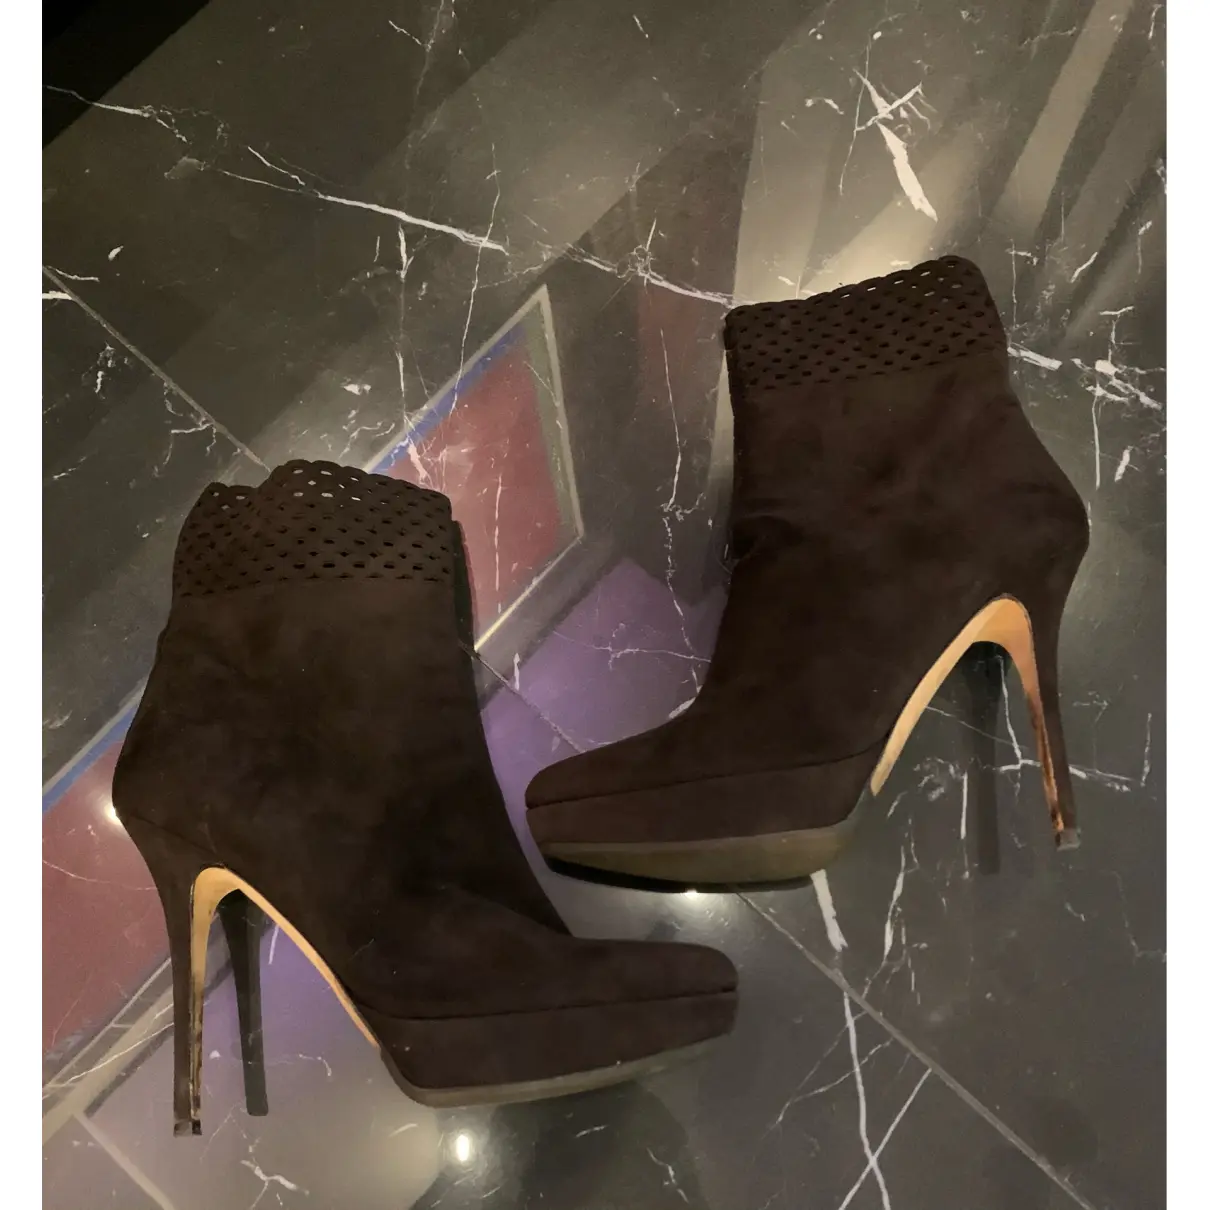 Buy Yves Saint Laurent Ankle boots online